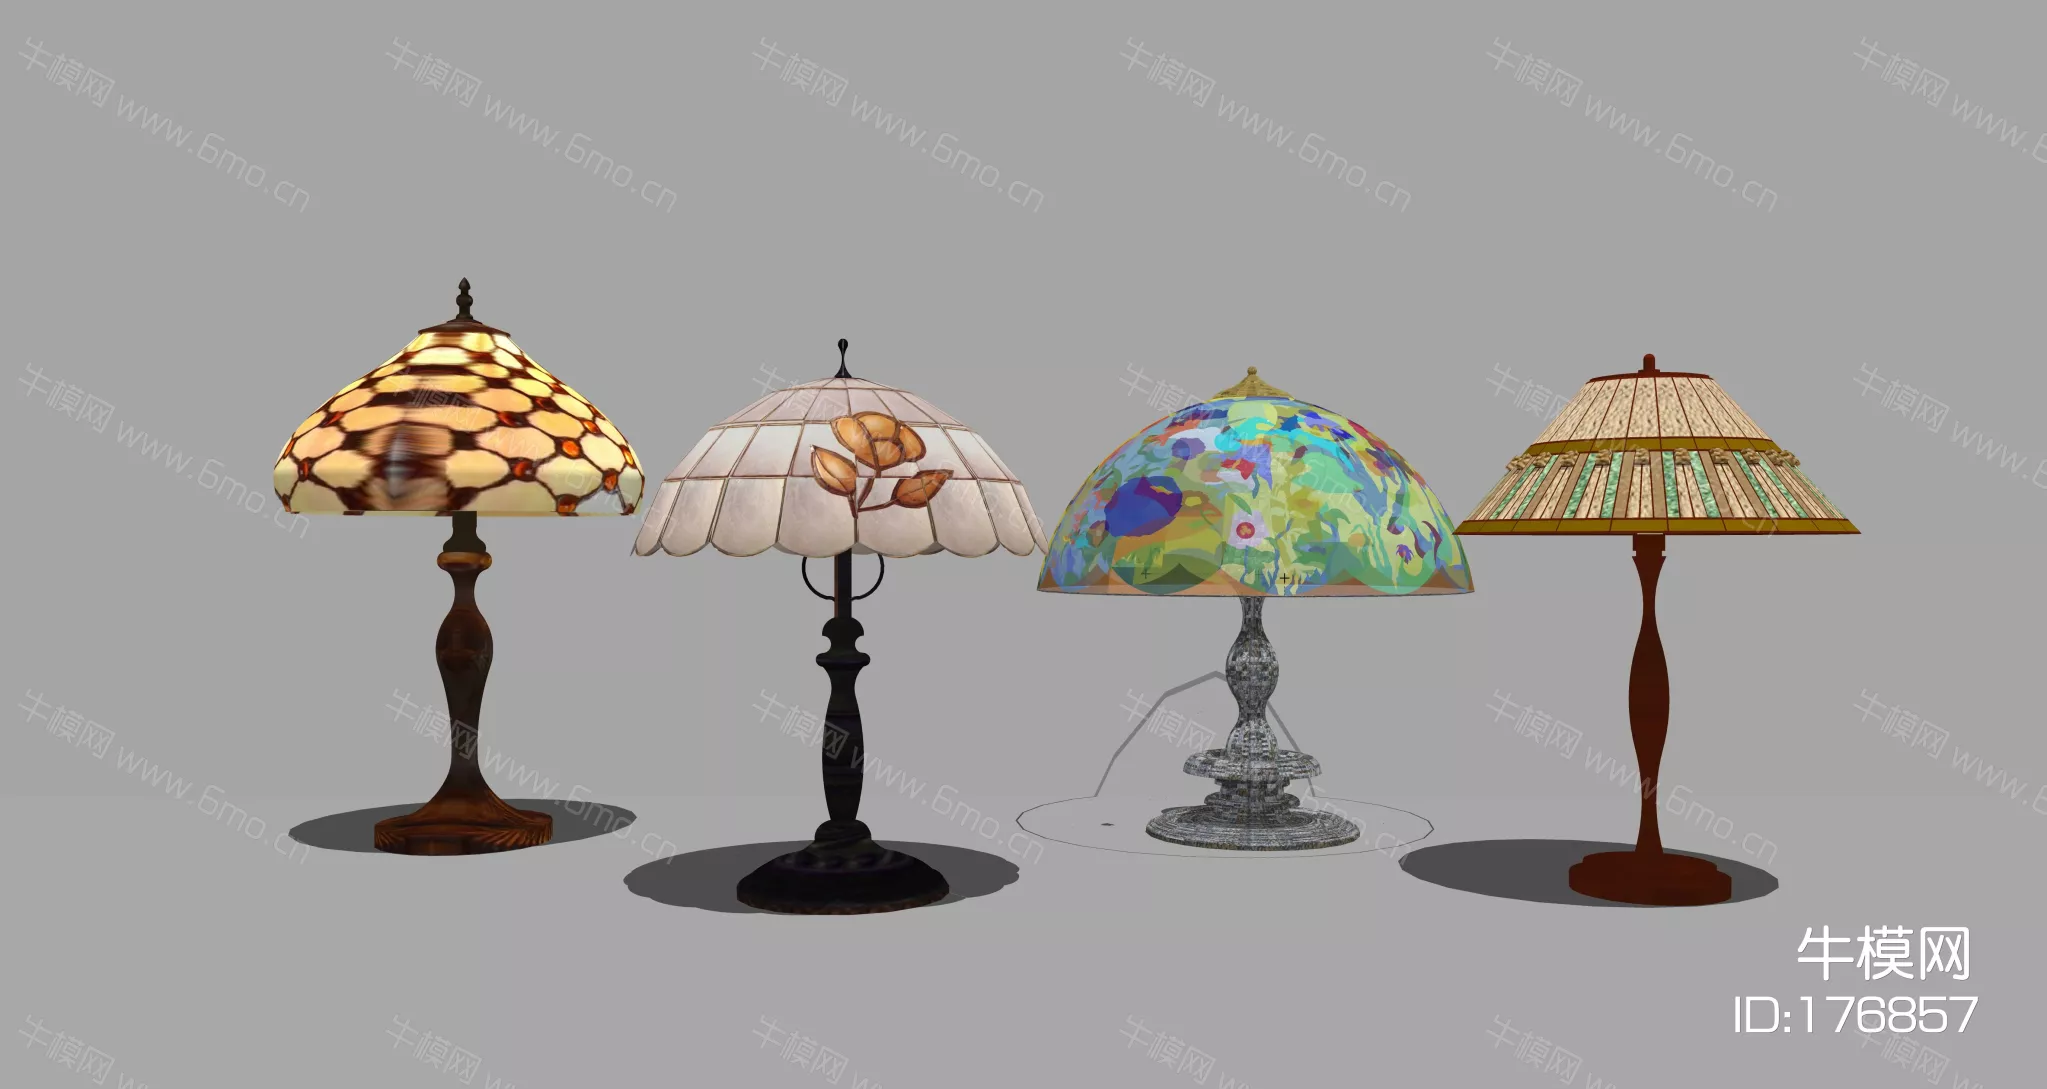 AMERICAN TABLE LAMP - SKETCHUP 3D MODEL - ENSCAPE - 176857